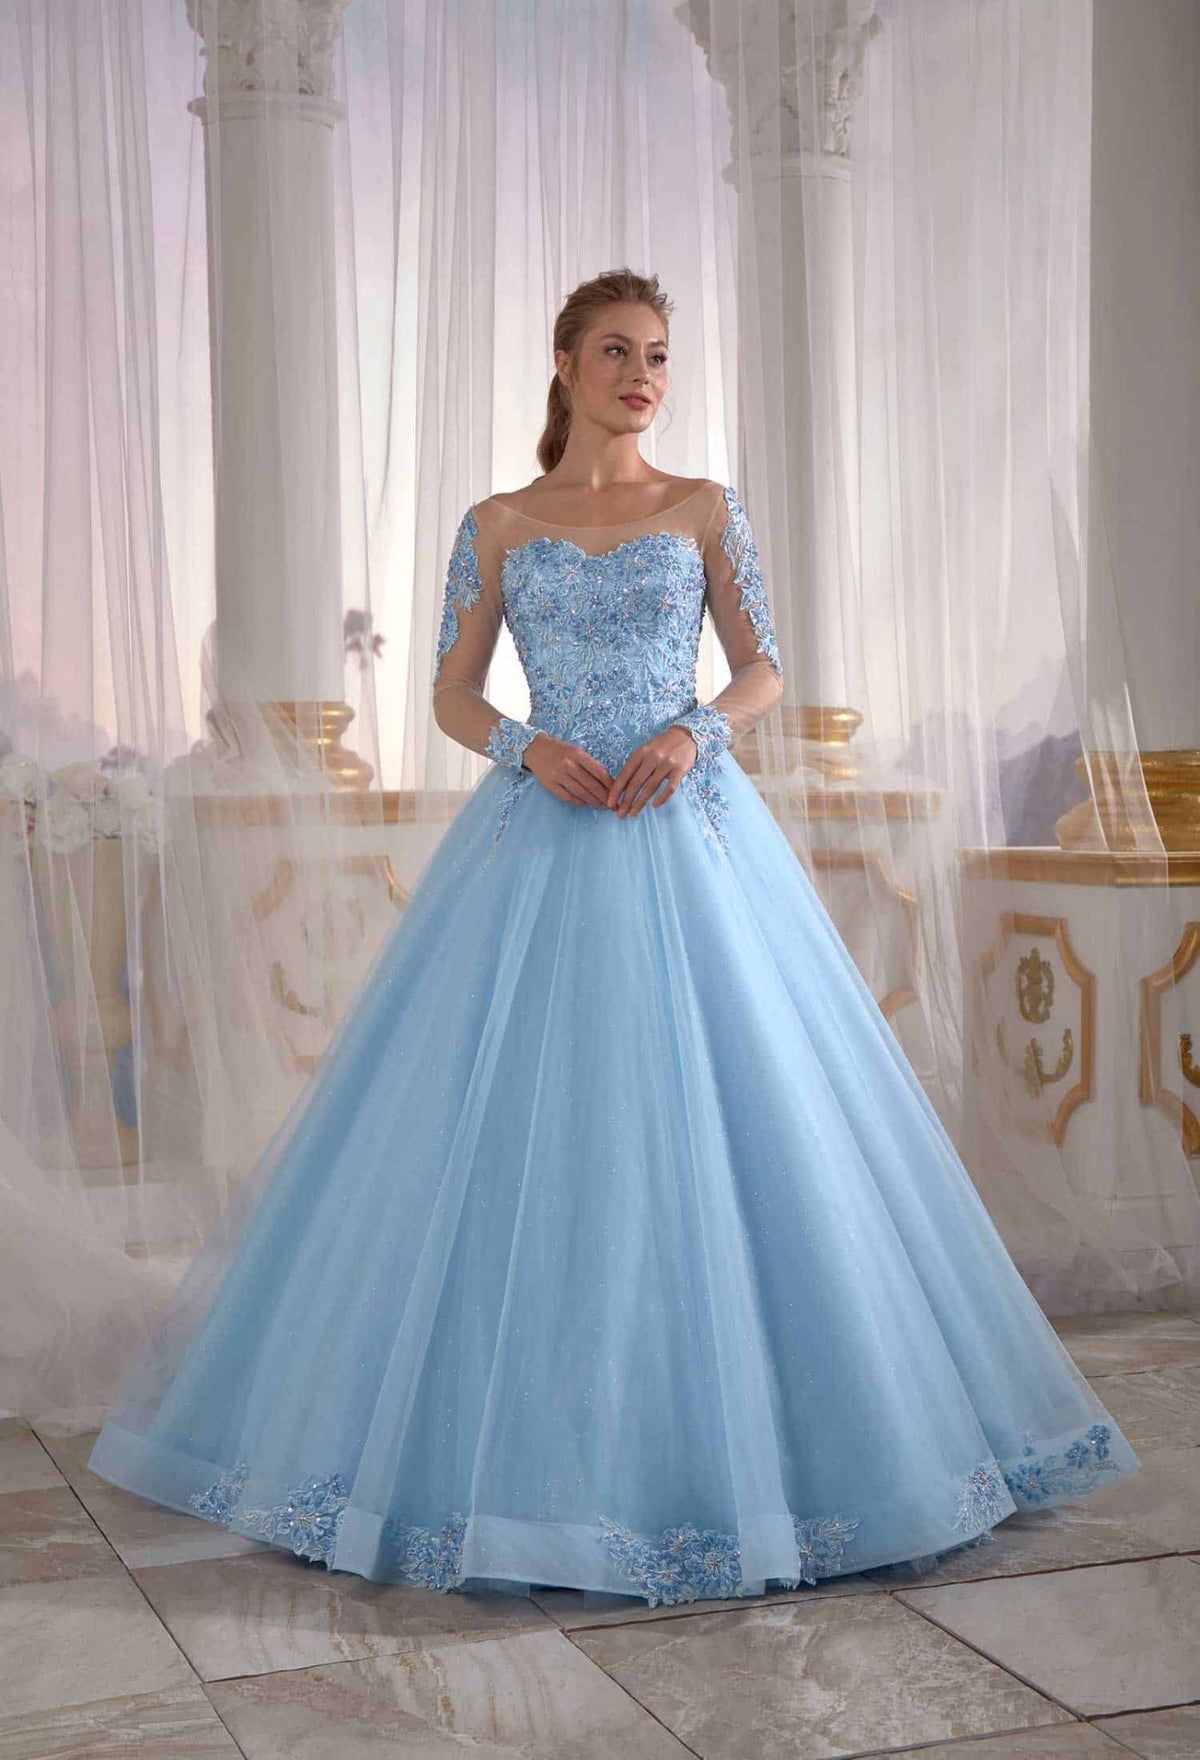 prom dresses online İce Blue Tulle Engagement Dress Pleated Open Back Embellished Top Detail Cold Shoulder (1)